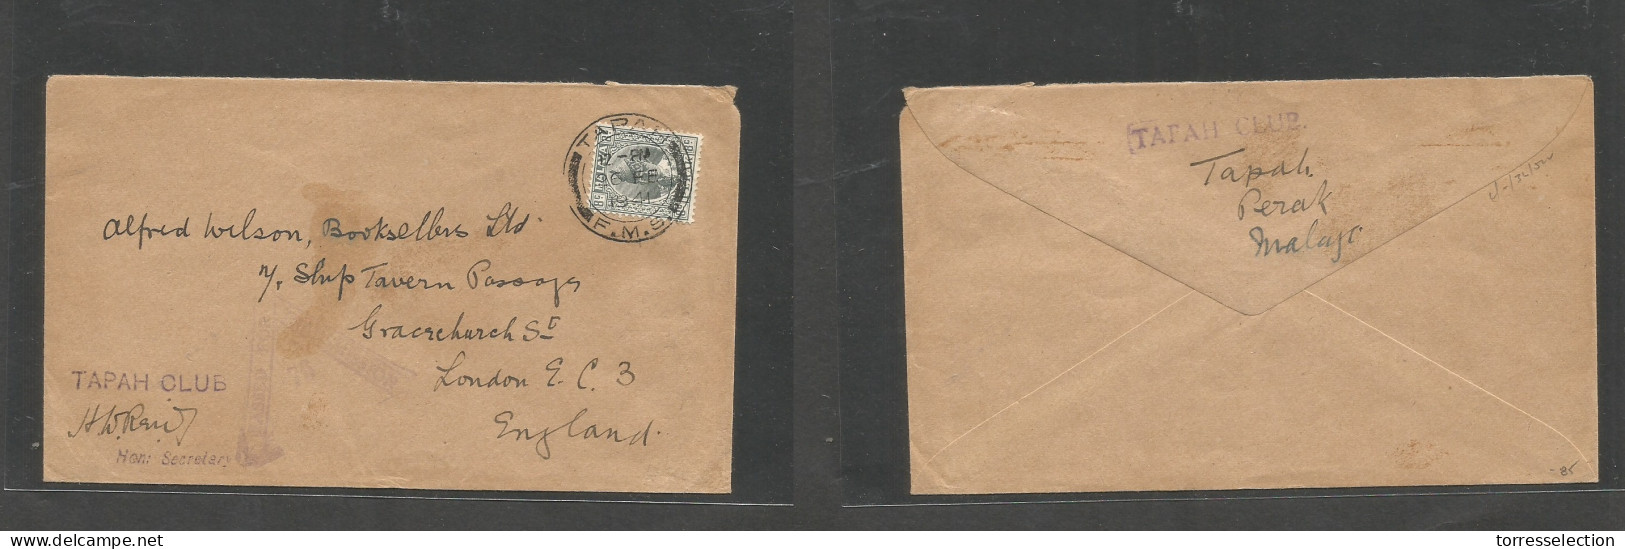 MALAYSIA. 1941 (26 Febr) FMS, Perak, Tapah - London, England. Tapah Club. WWII Fkd 8c Censored Envelope. Fine Usage. - Malaysia (1964-...)